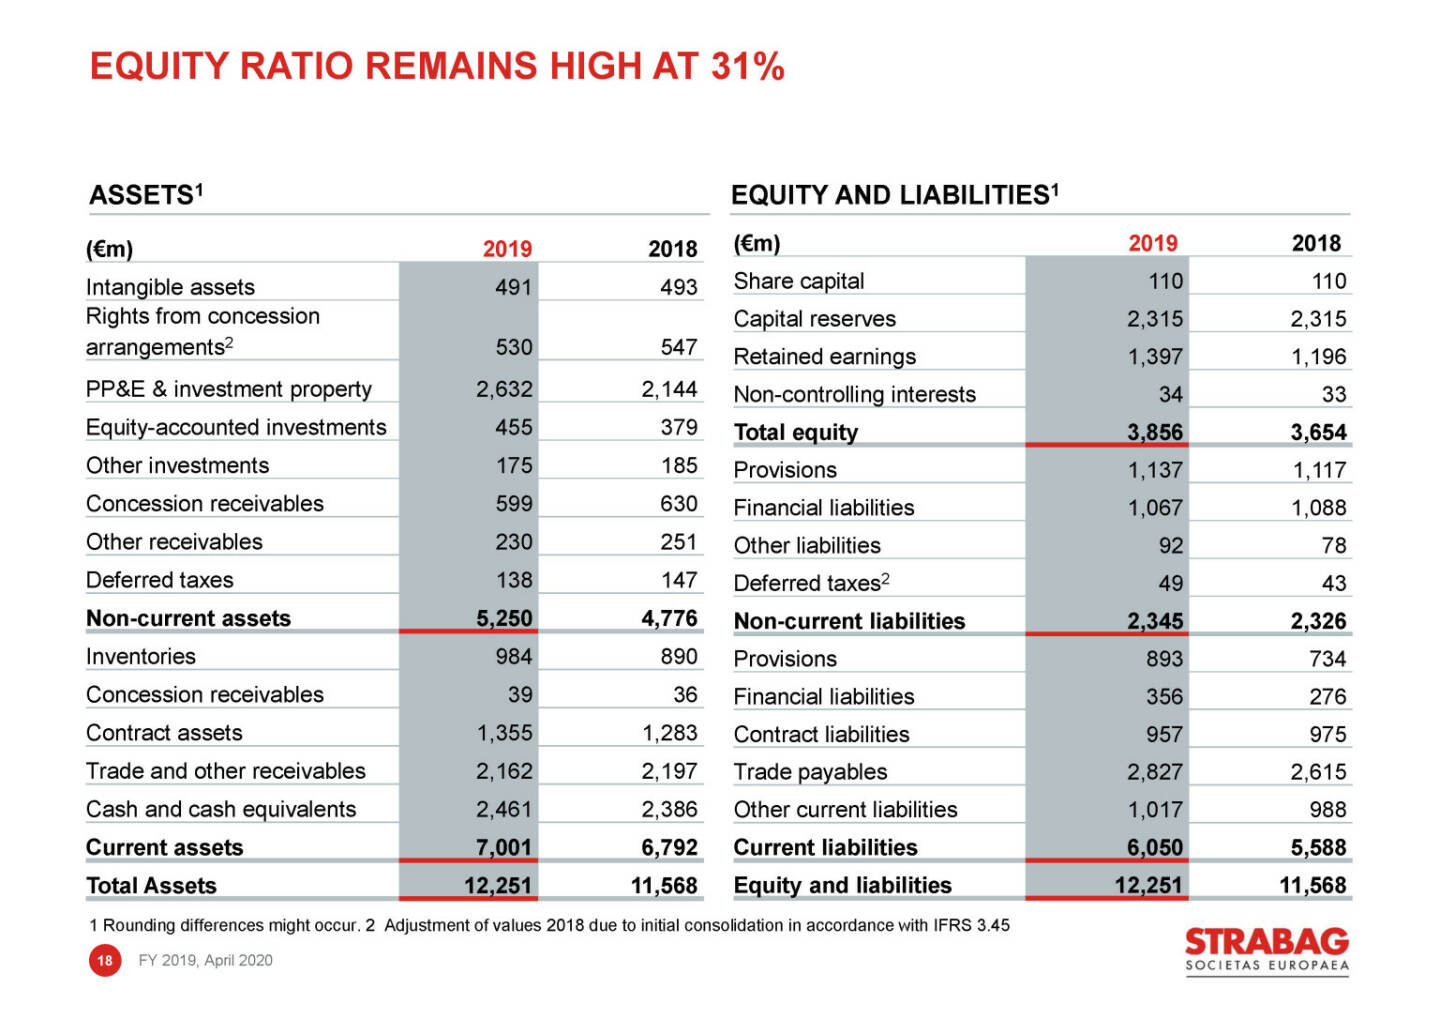 Strabag - equity ratio remains high at 31%